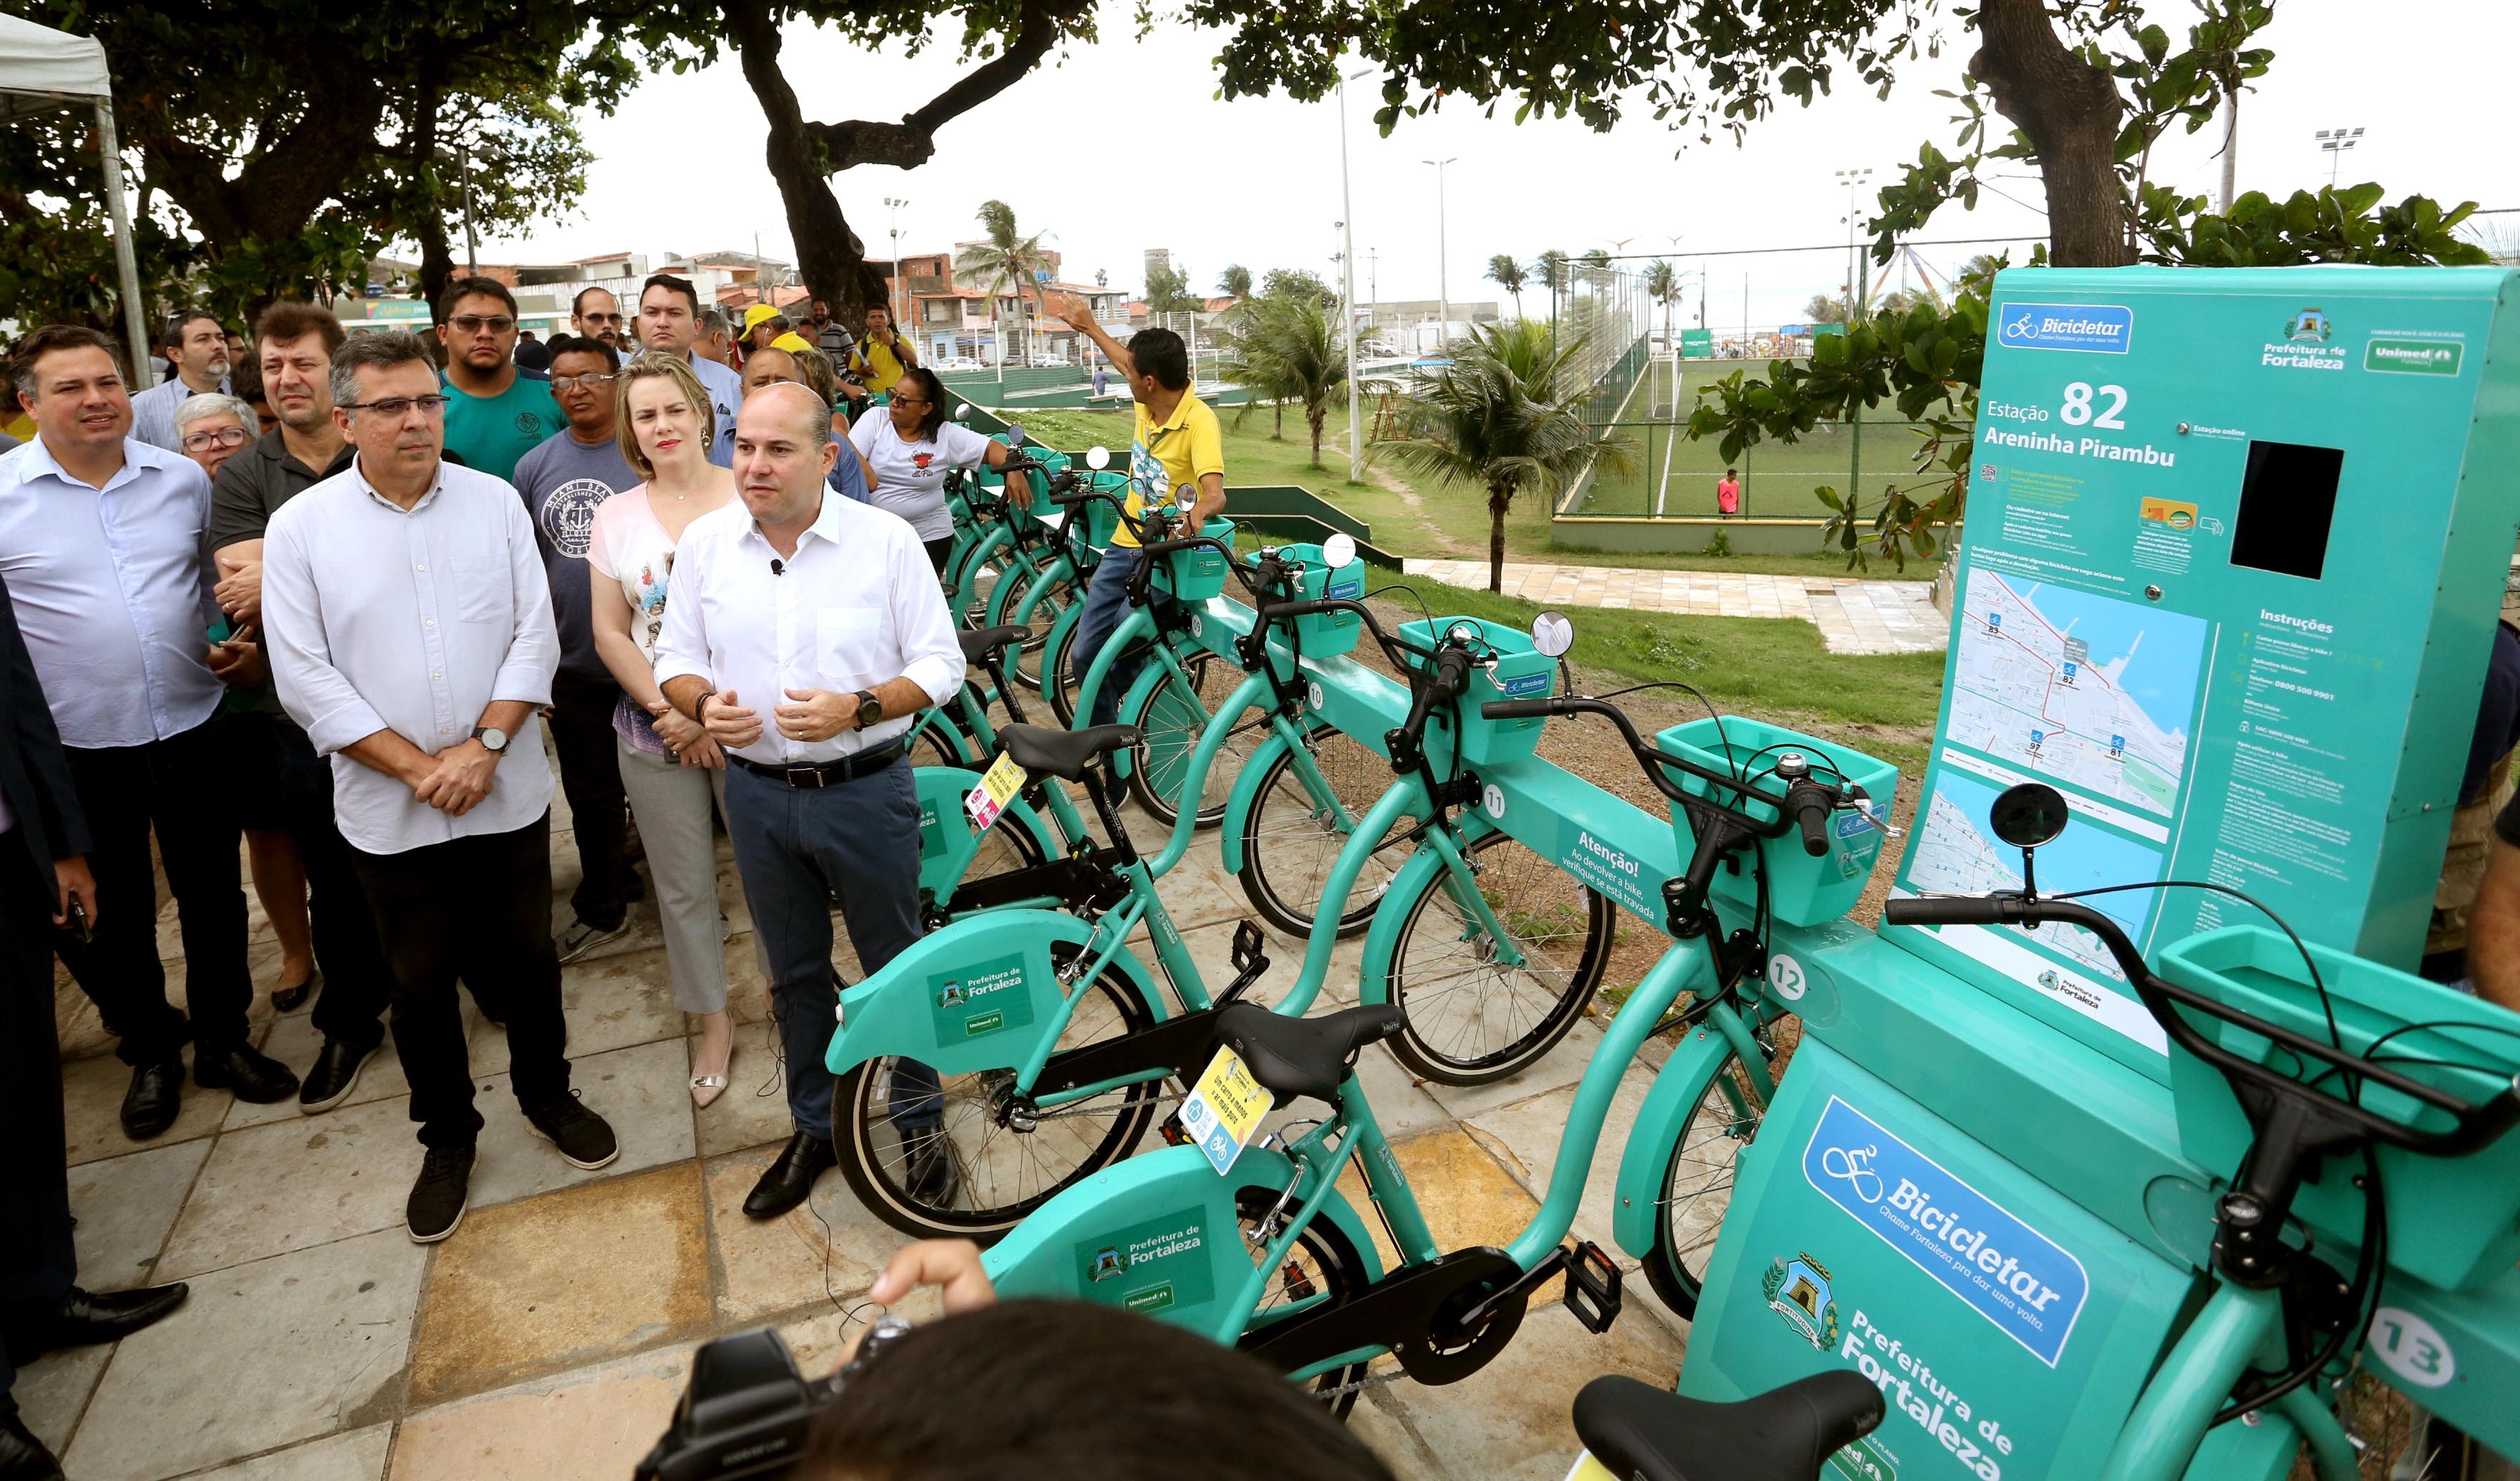 Fóruns Territoriais de Fortaleza - Fórun Territorial Cristo Redentor e Pirambu - Prefeito Roberto Cláudio anuncia expansão do Bicicletar para 210 estações